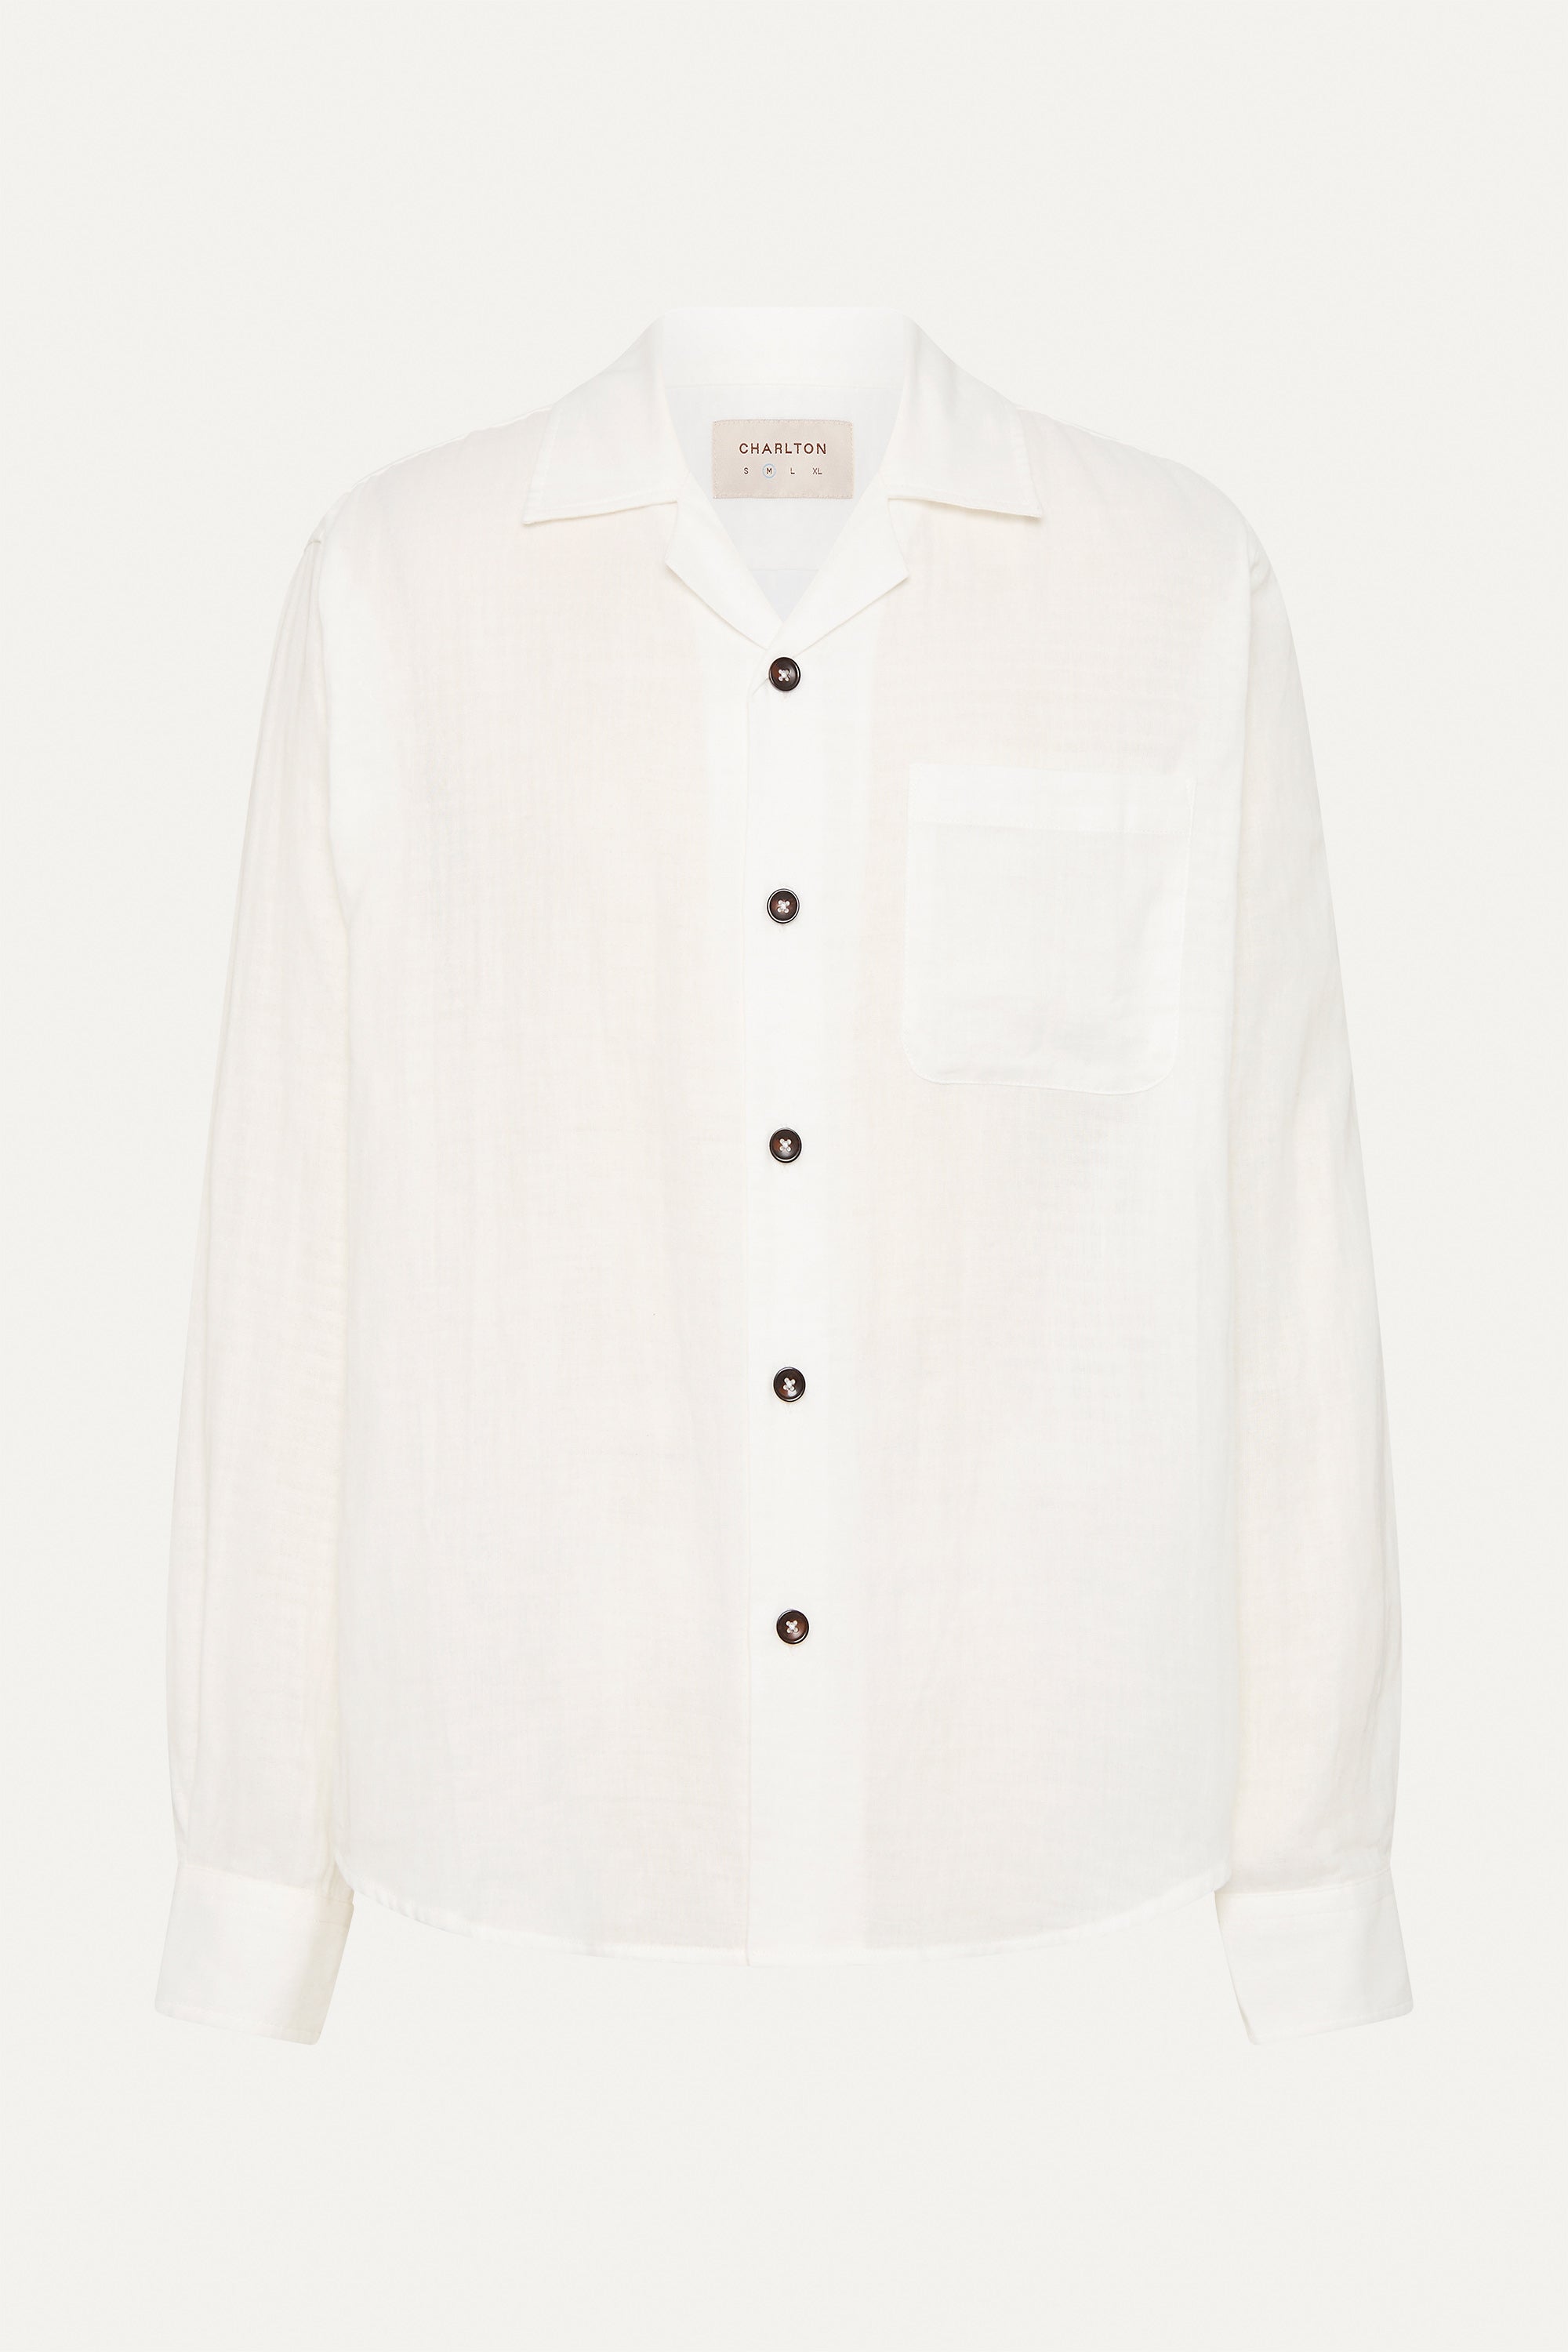 L/S Shirt in Cream Cotton Gauze